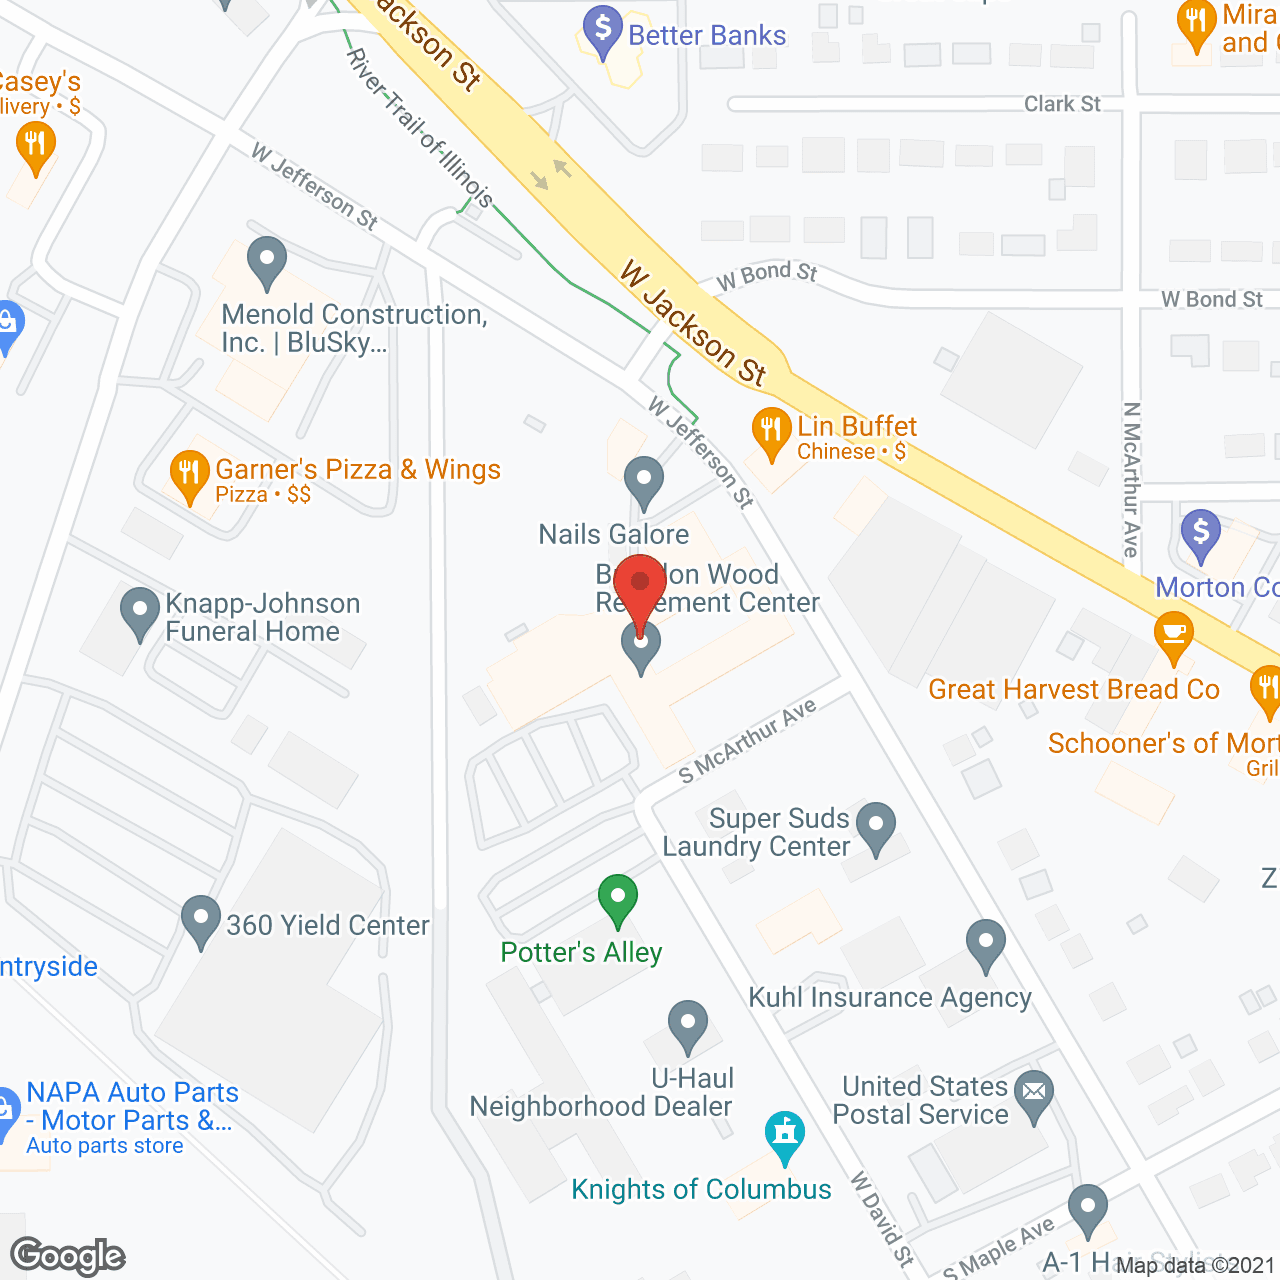 Brandon Wood Retirement Center in google map